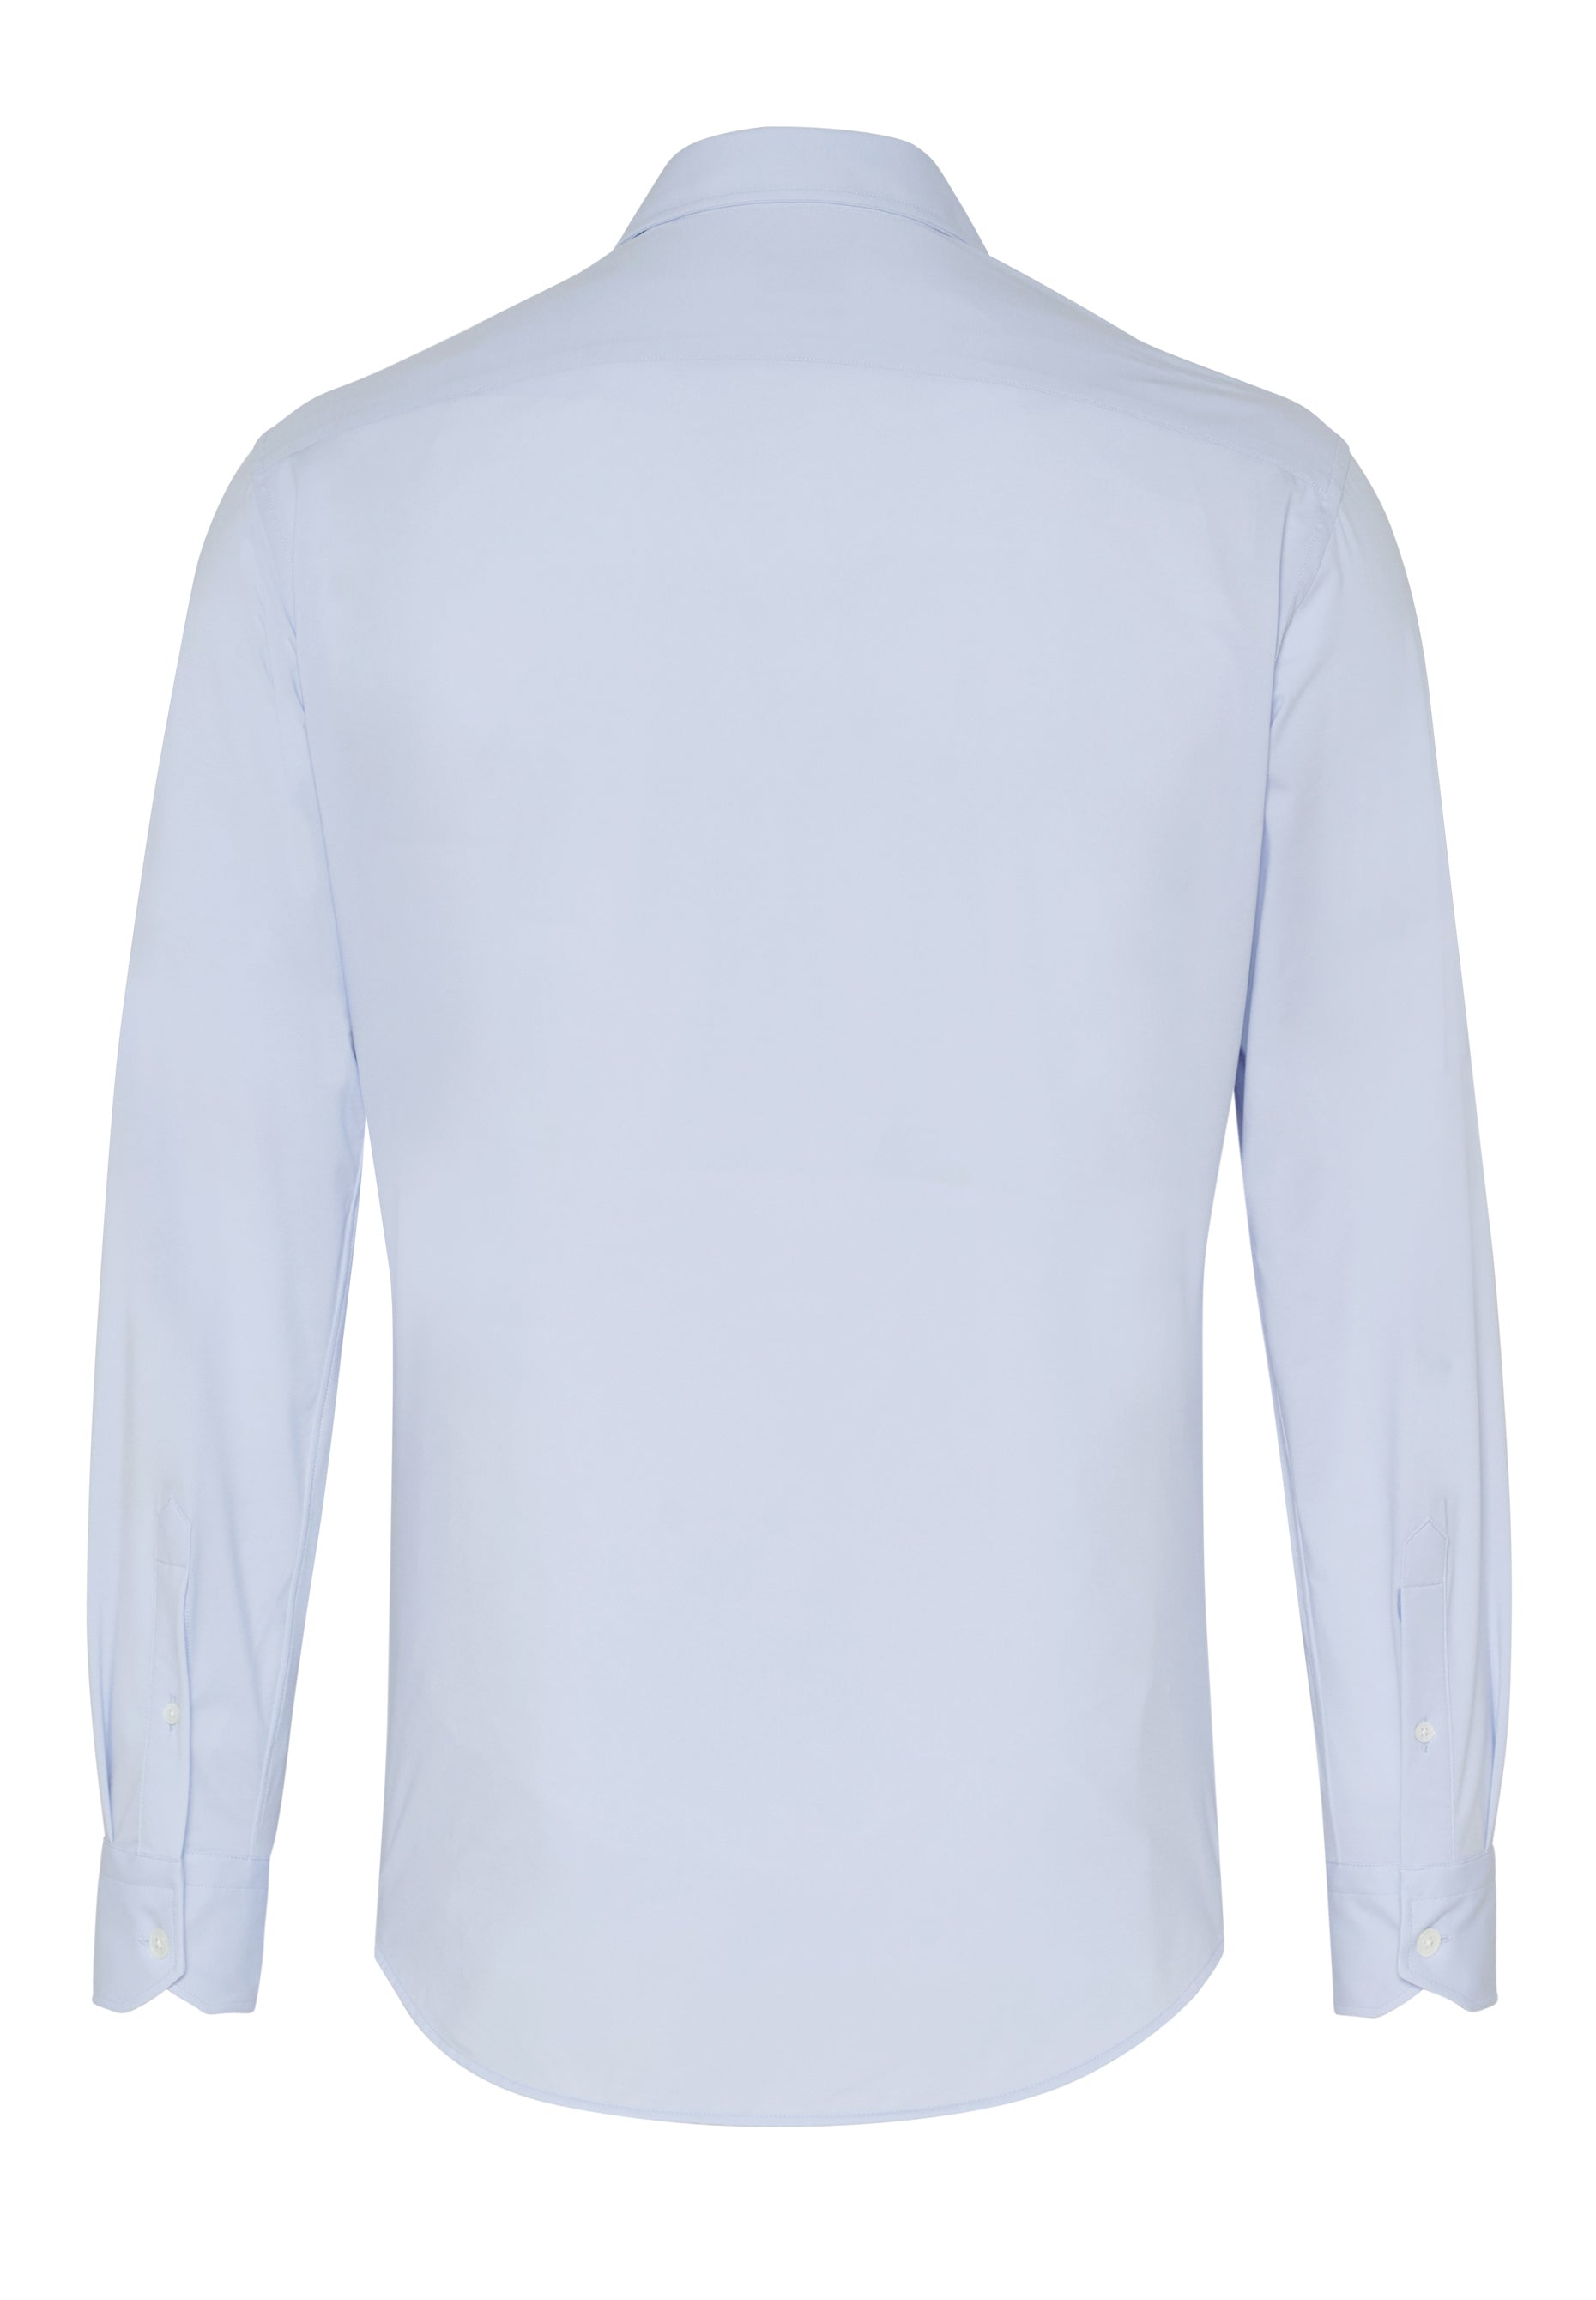 T1003-311 - Traiano Rossini Radical Fit Shirt - blue